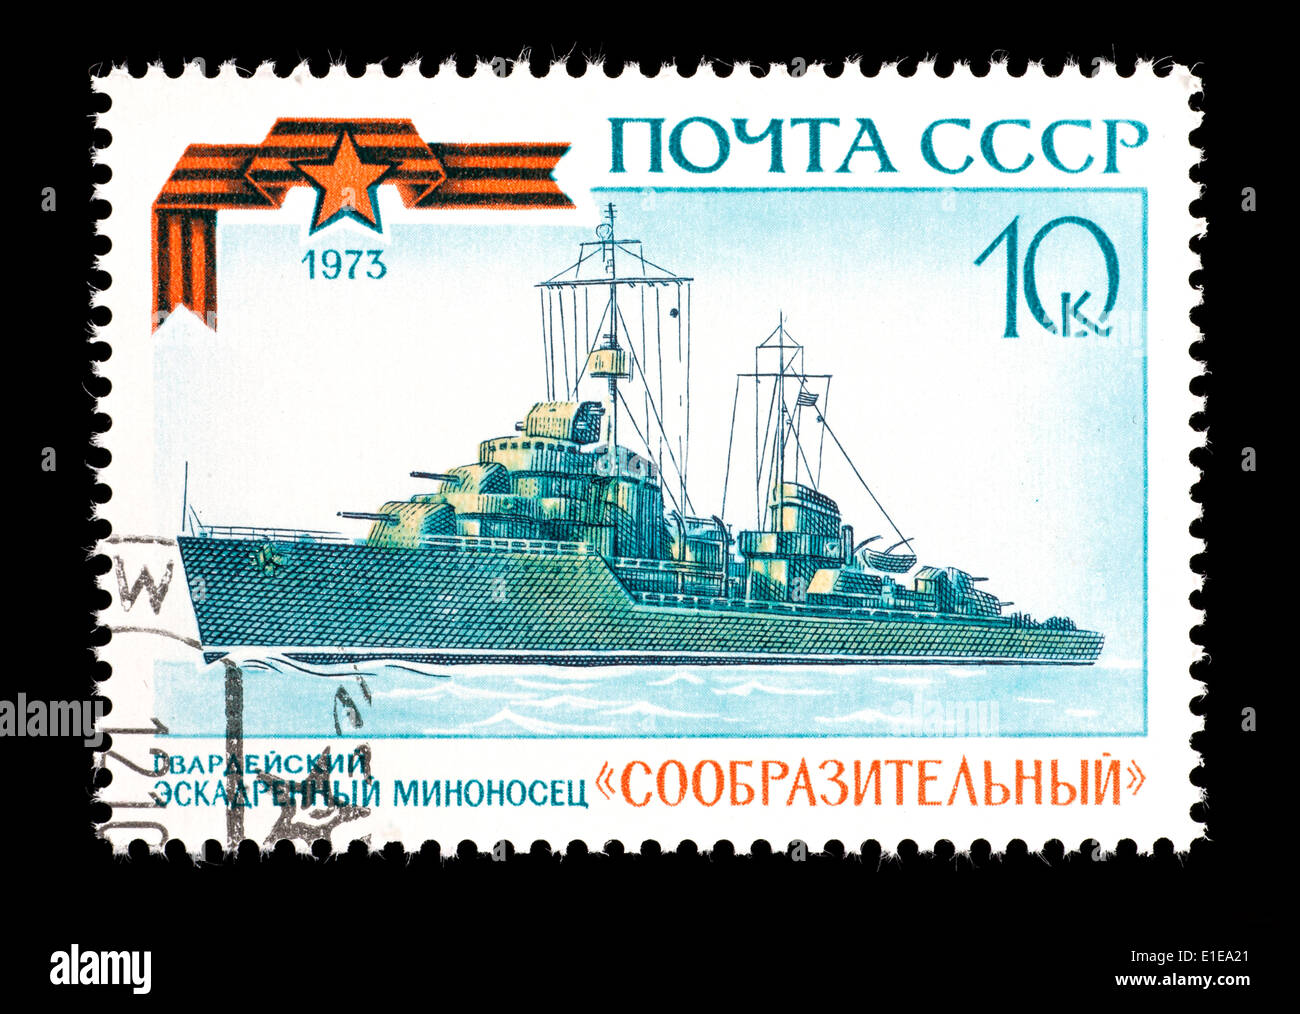 Postage stamp from the Soviet Union depicting the torpedo boat Soobrazitelny. Stock Photo